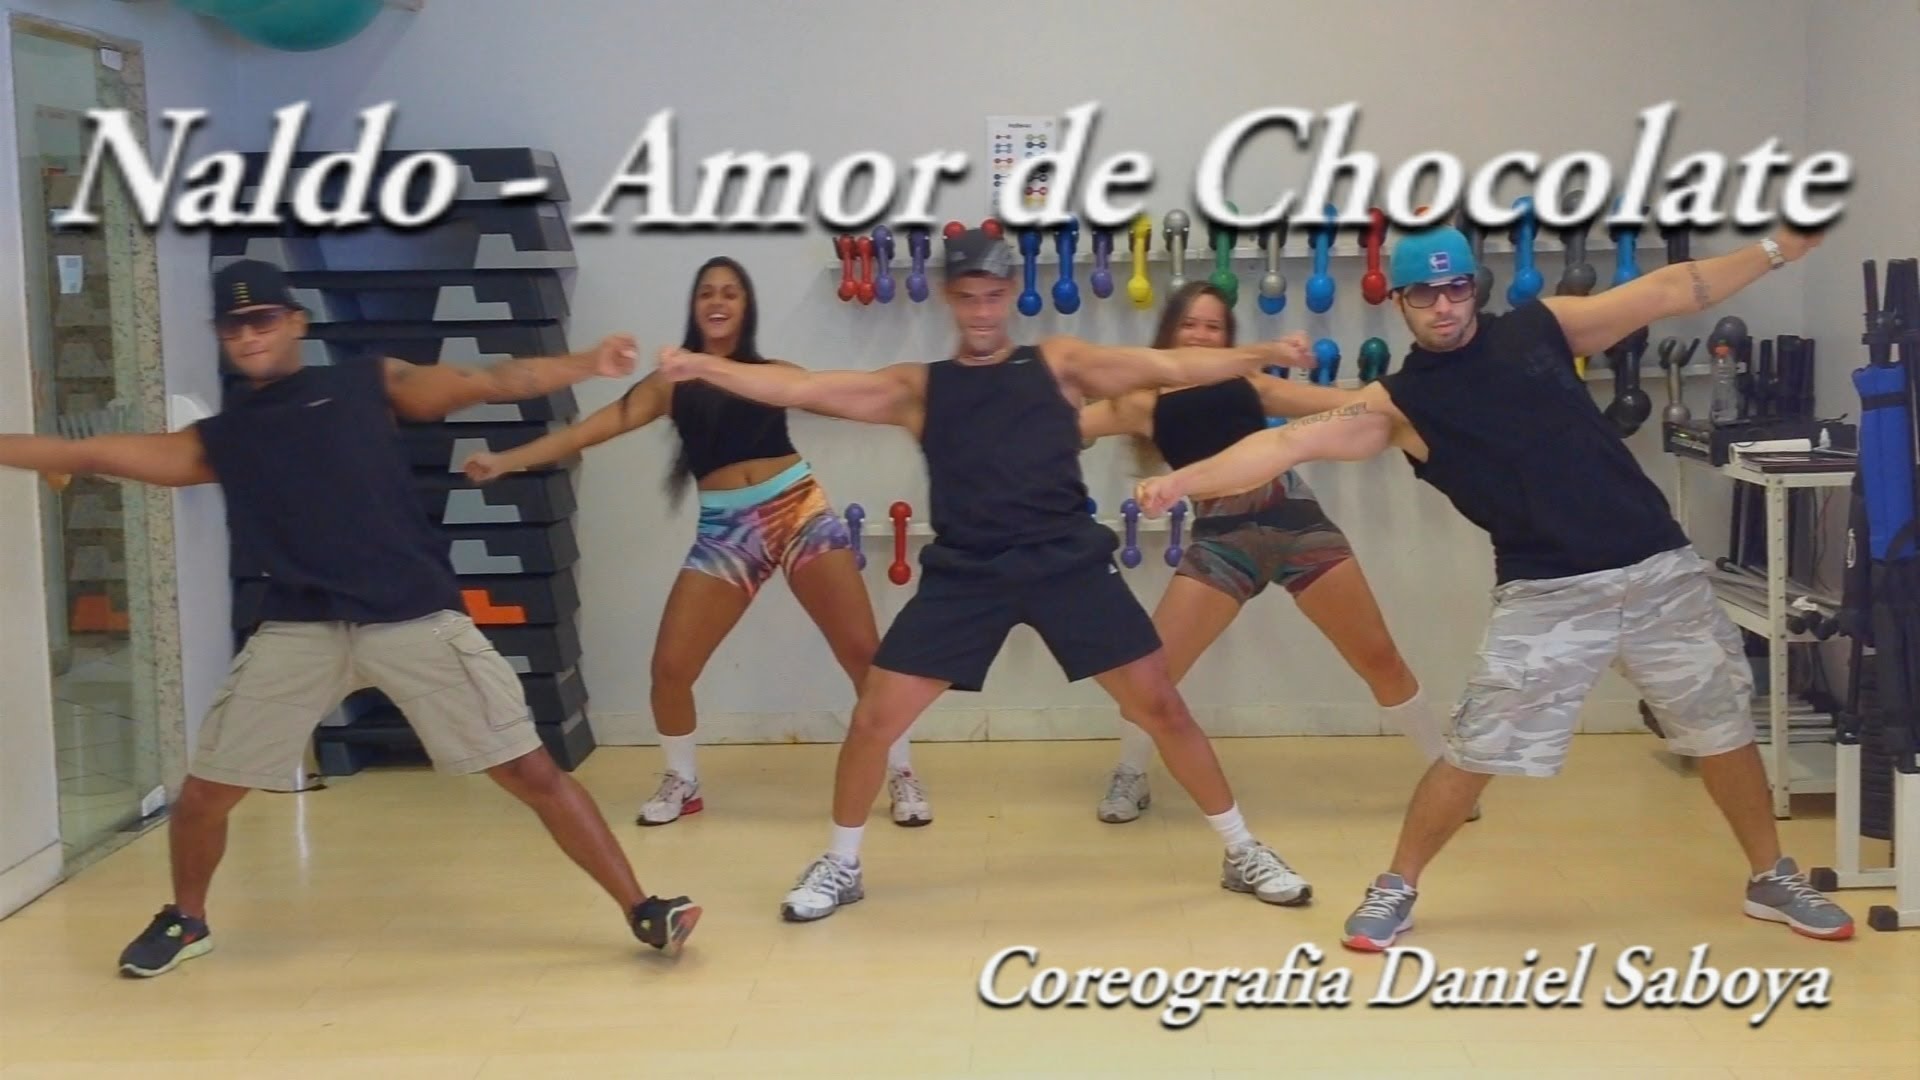 Naldo – Amor de Chocolate Coreografia Daniel Saboya